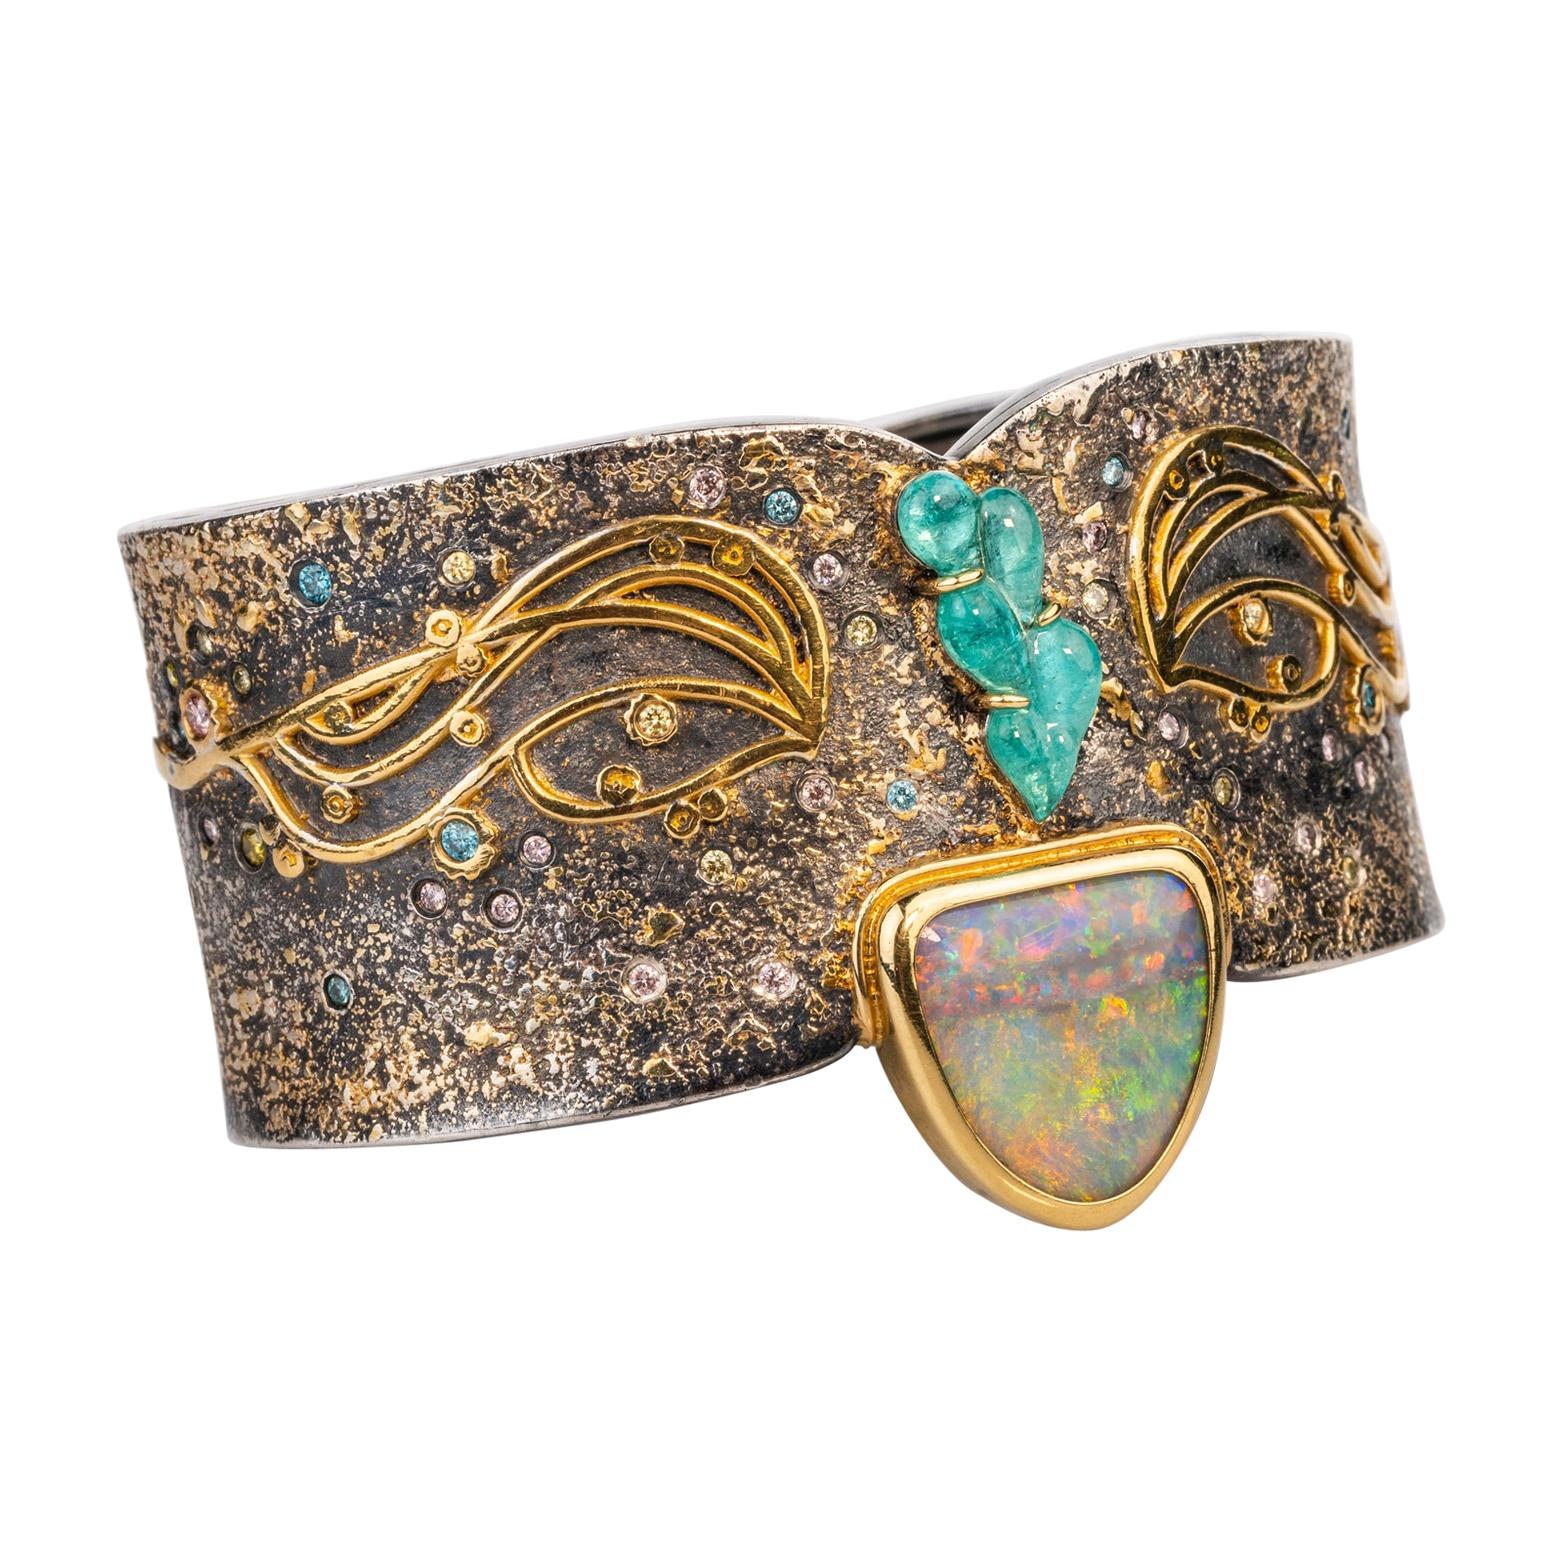 Oxidized Sterling Silver with 18k, 22k and 24k "Klimt" Inspired Cuff Bracelet